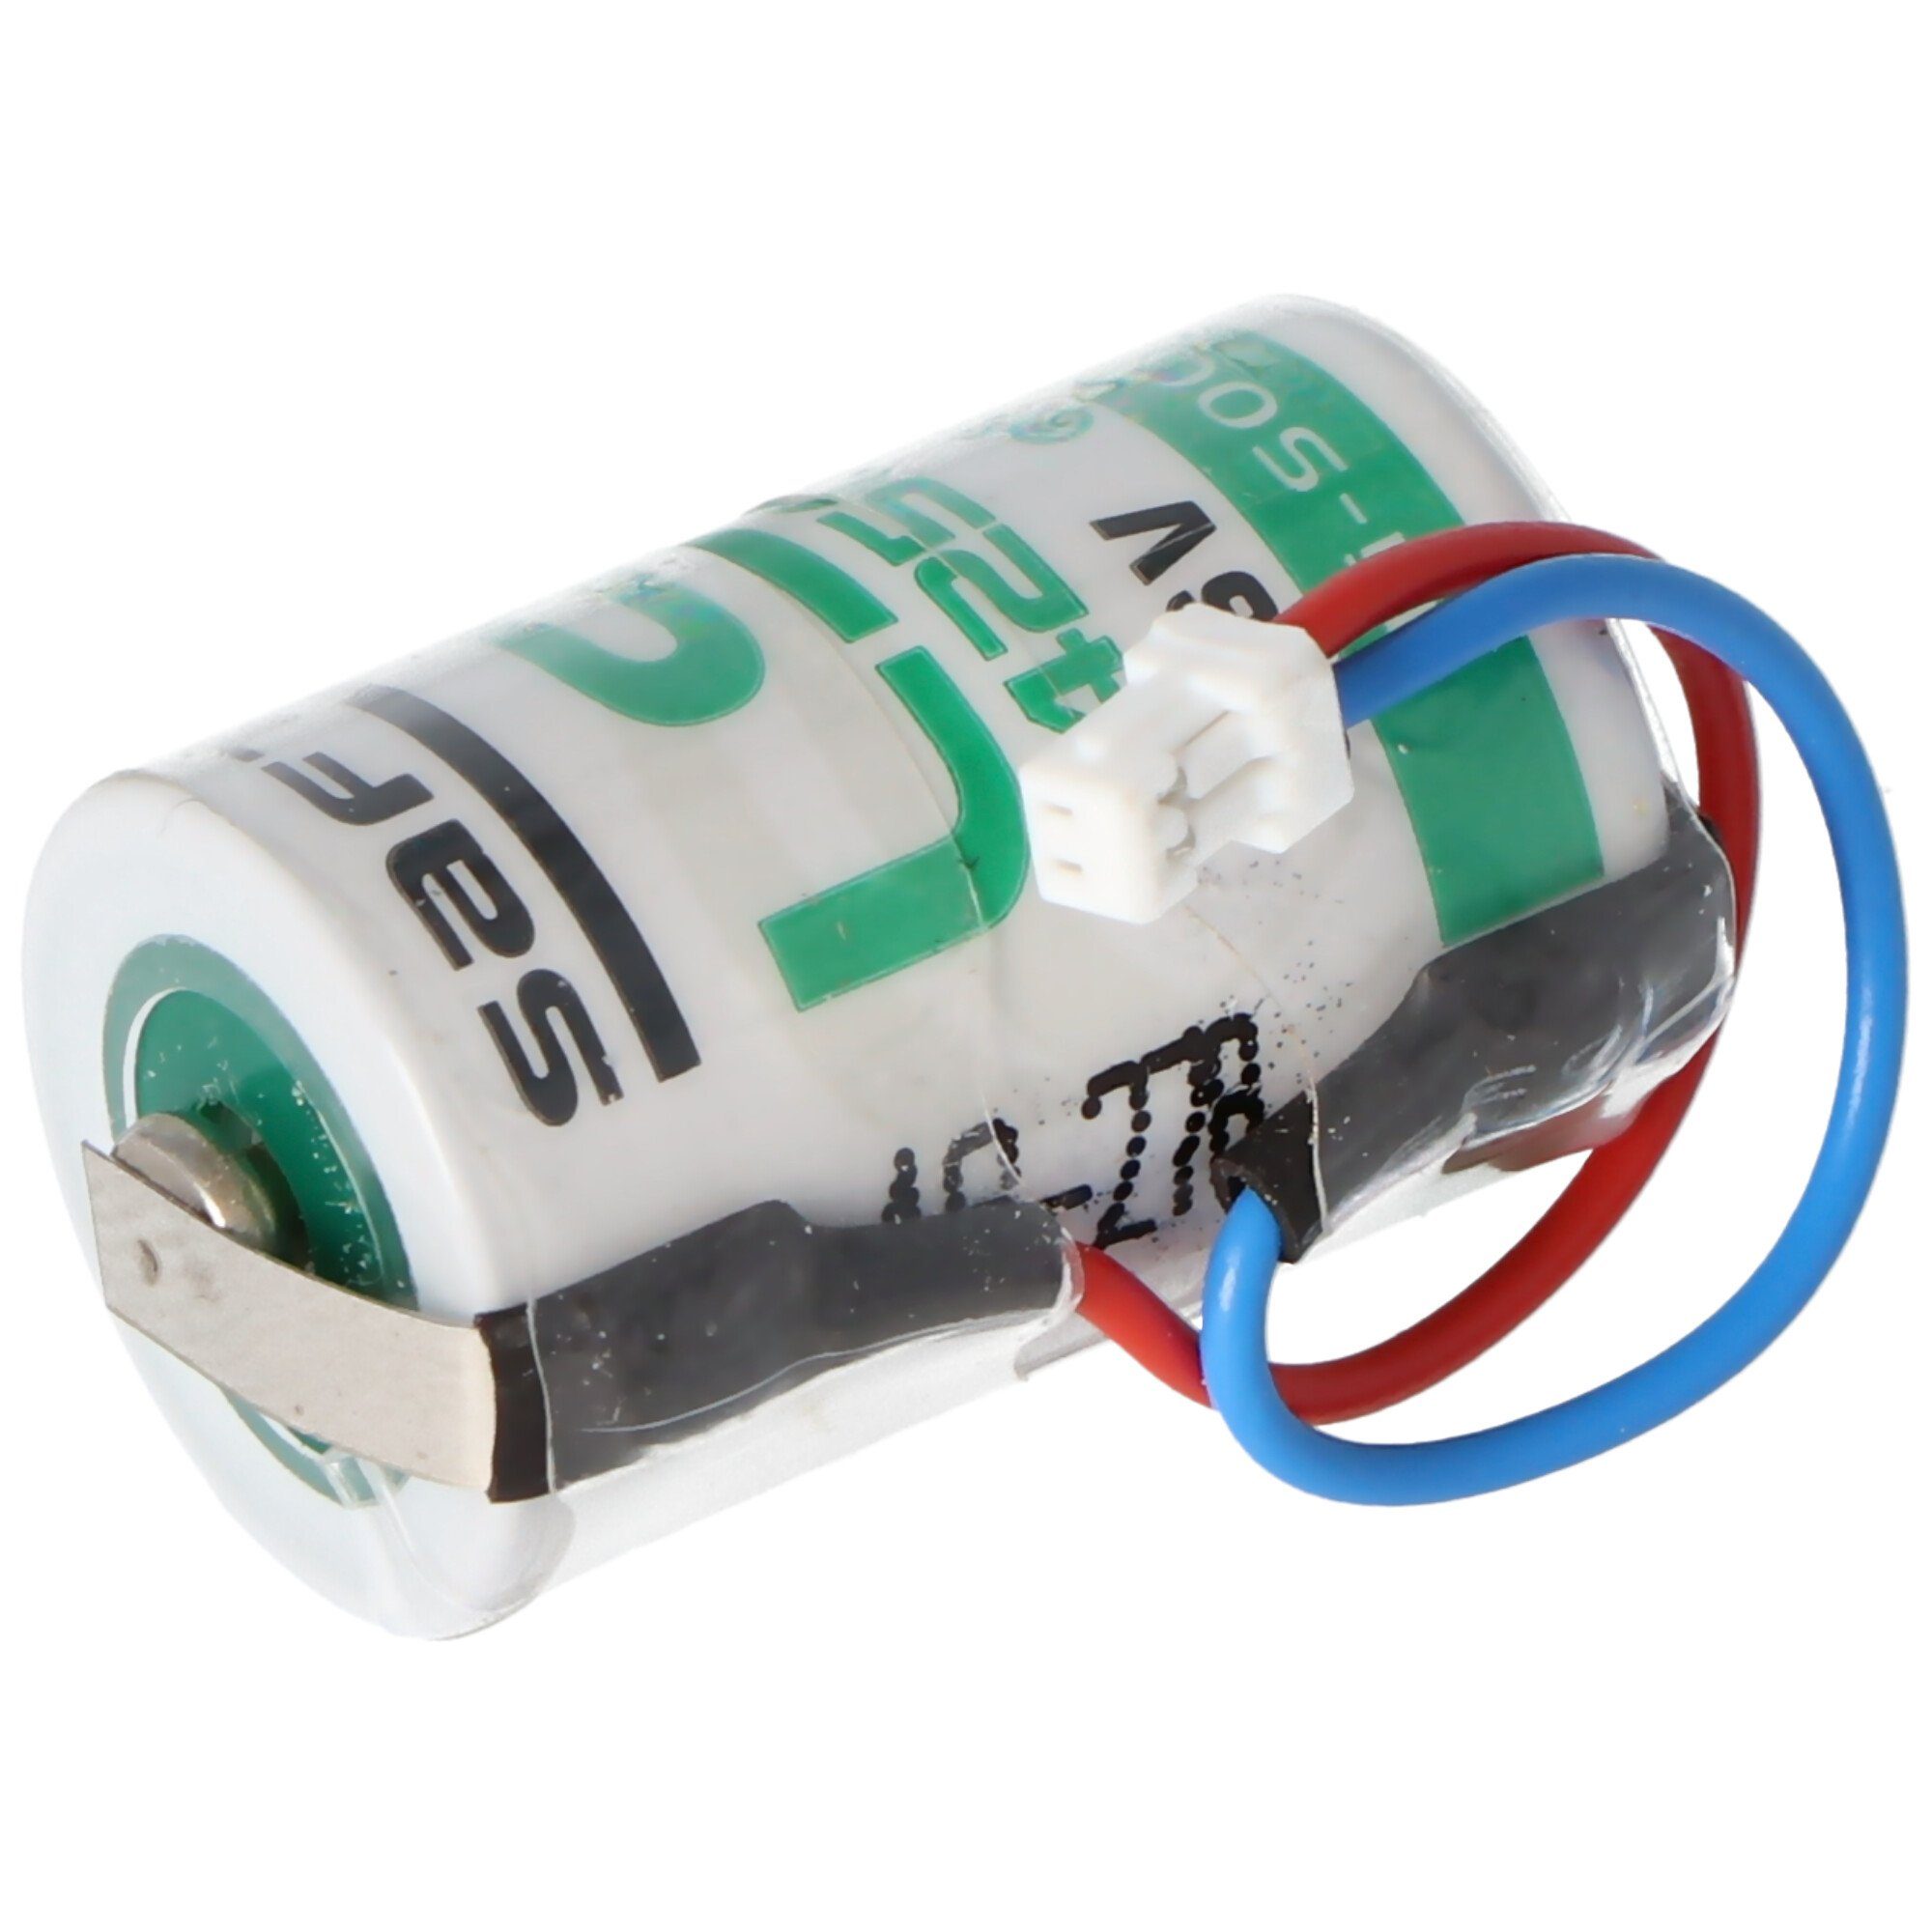 Kabel mit an Batterie, Stecker und mittig Saft Saft Lithium de Batterie LS14250 V) 3,6V (3,6